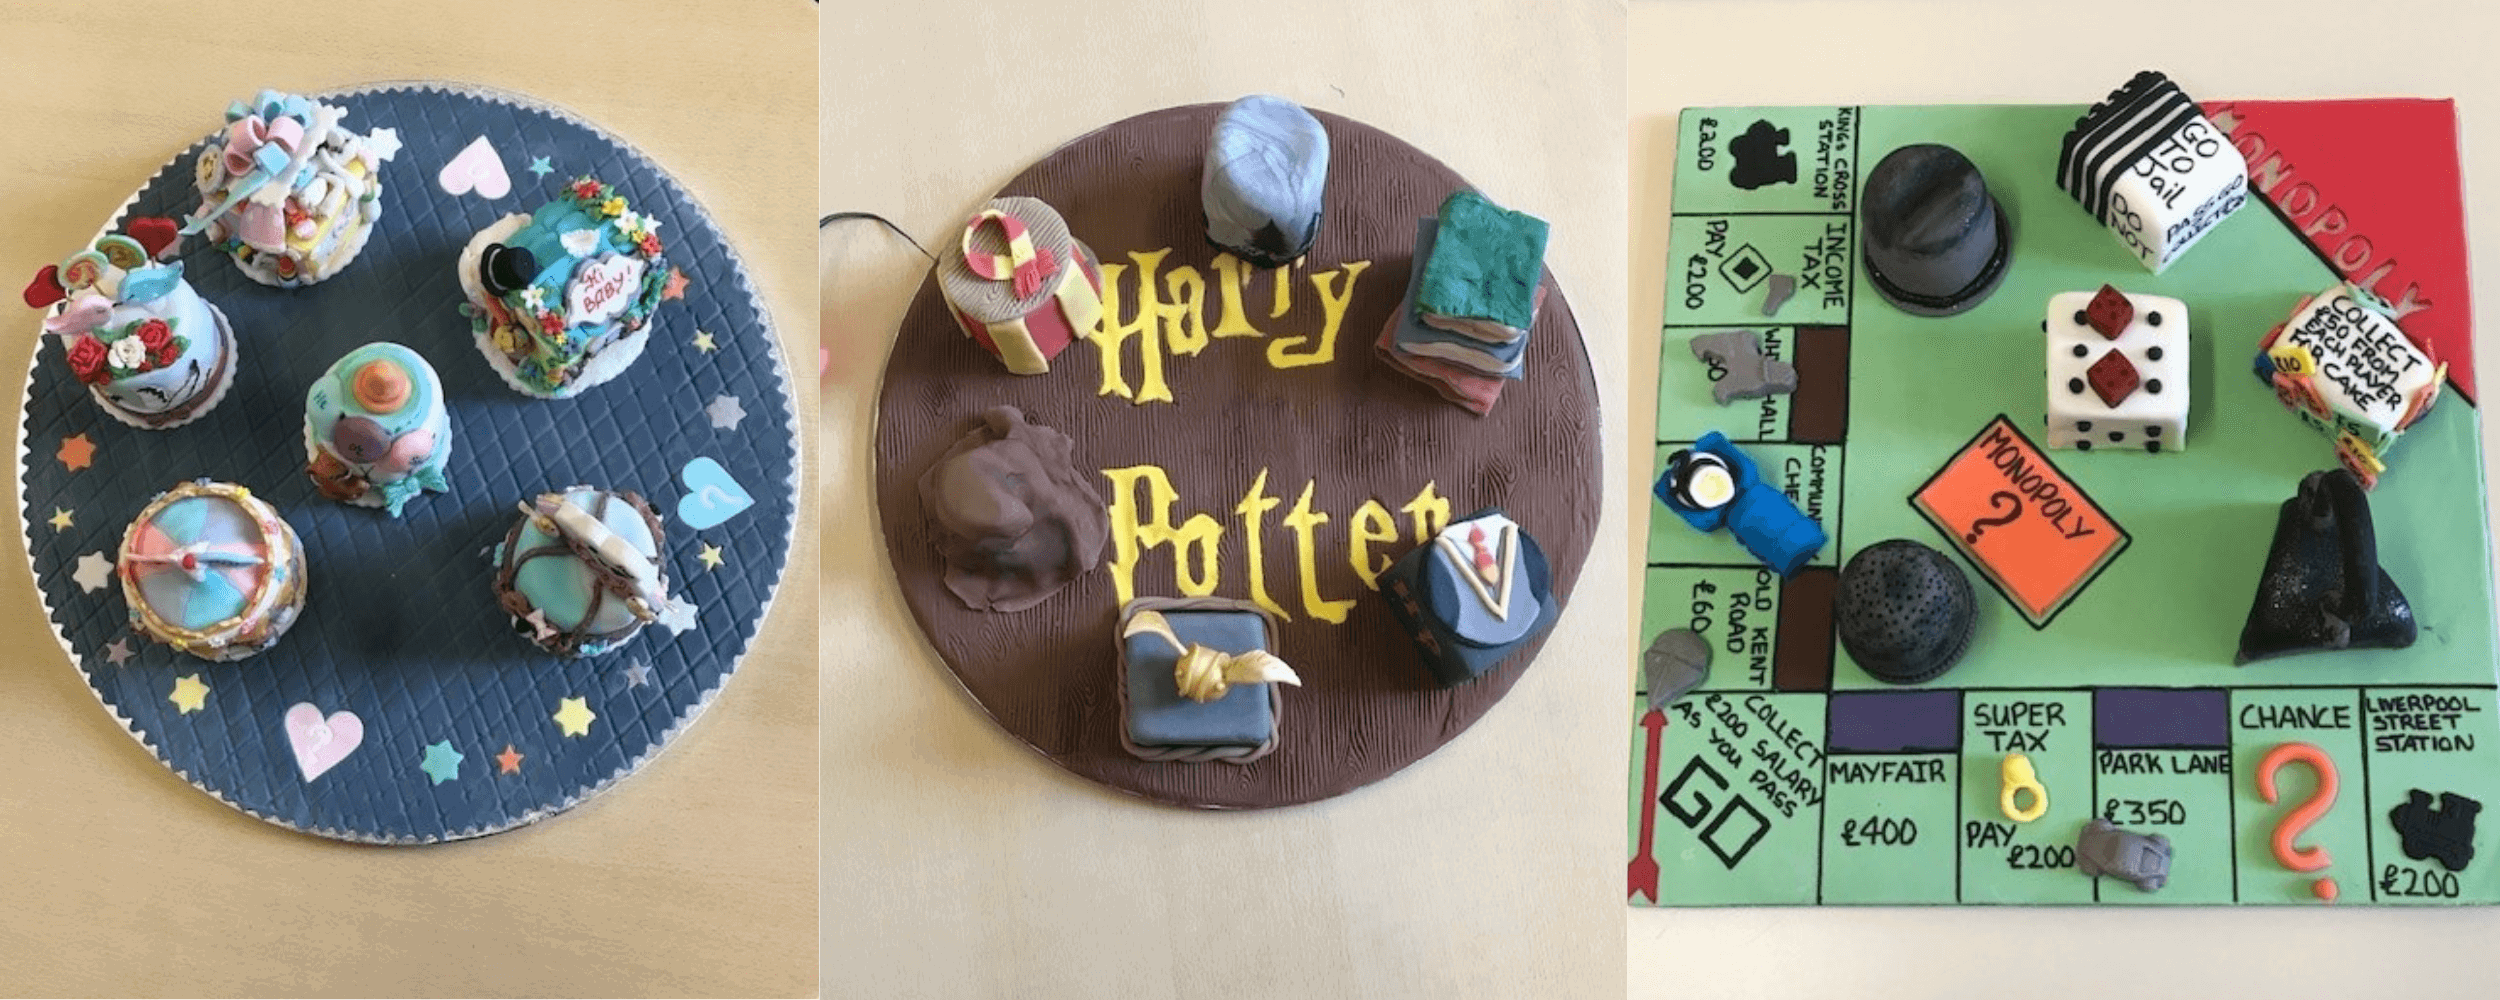 Cake Decorating learner work